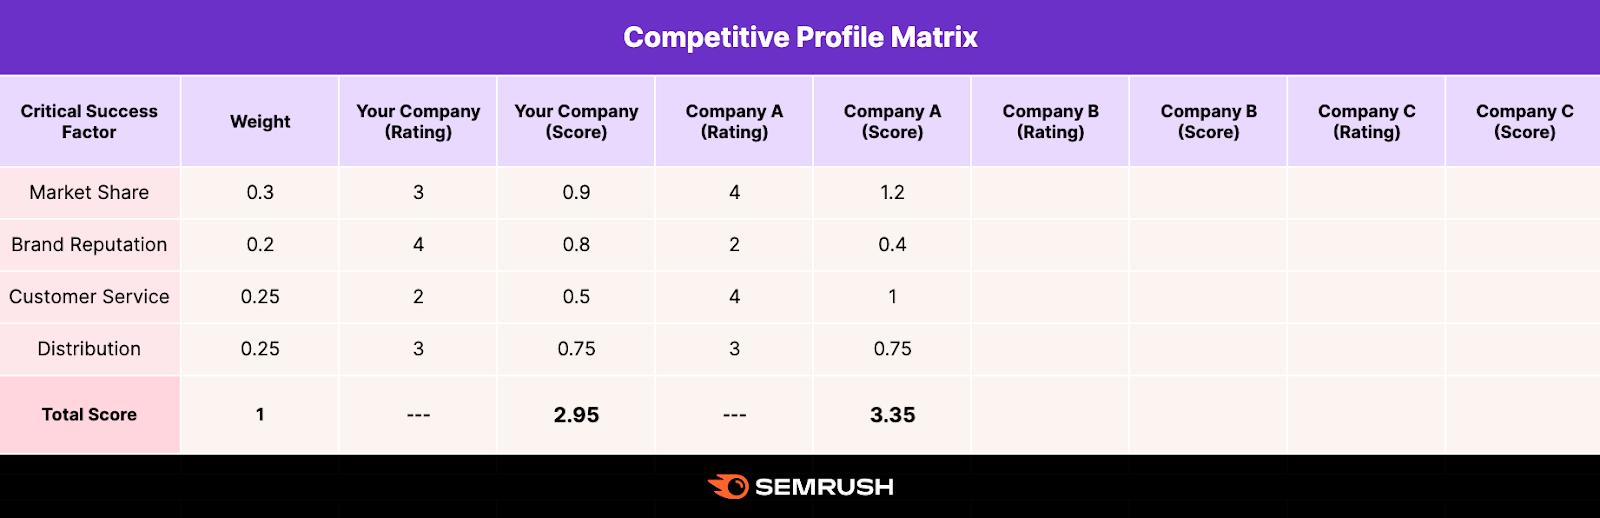 Simple competitive profile matrix comparing two companies